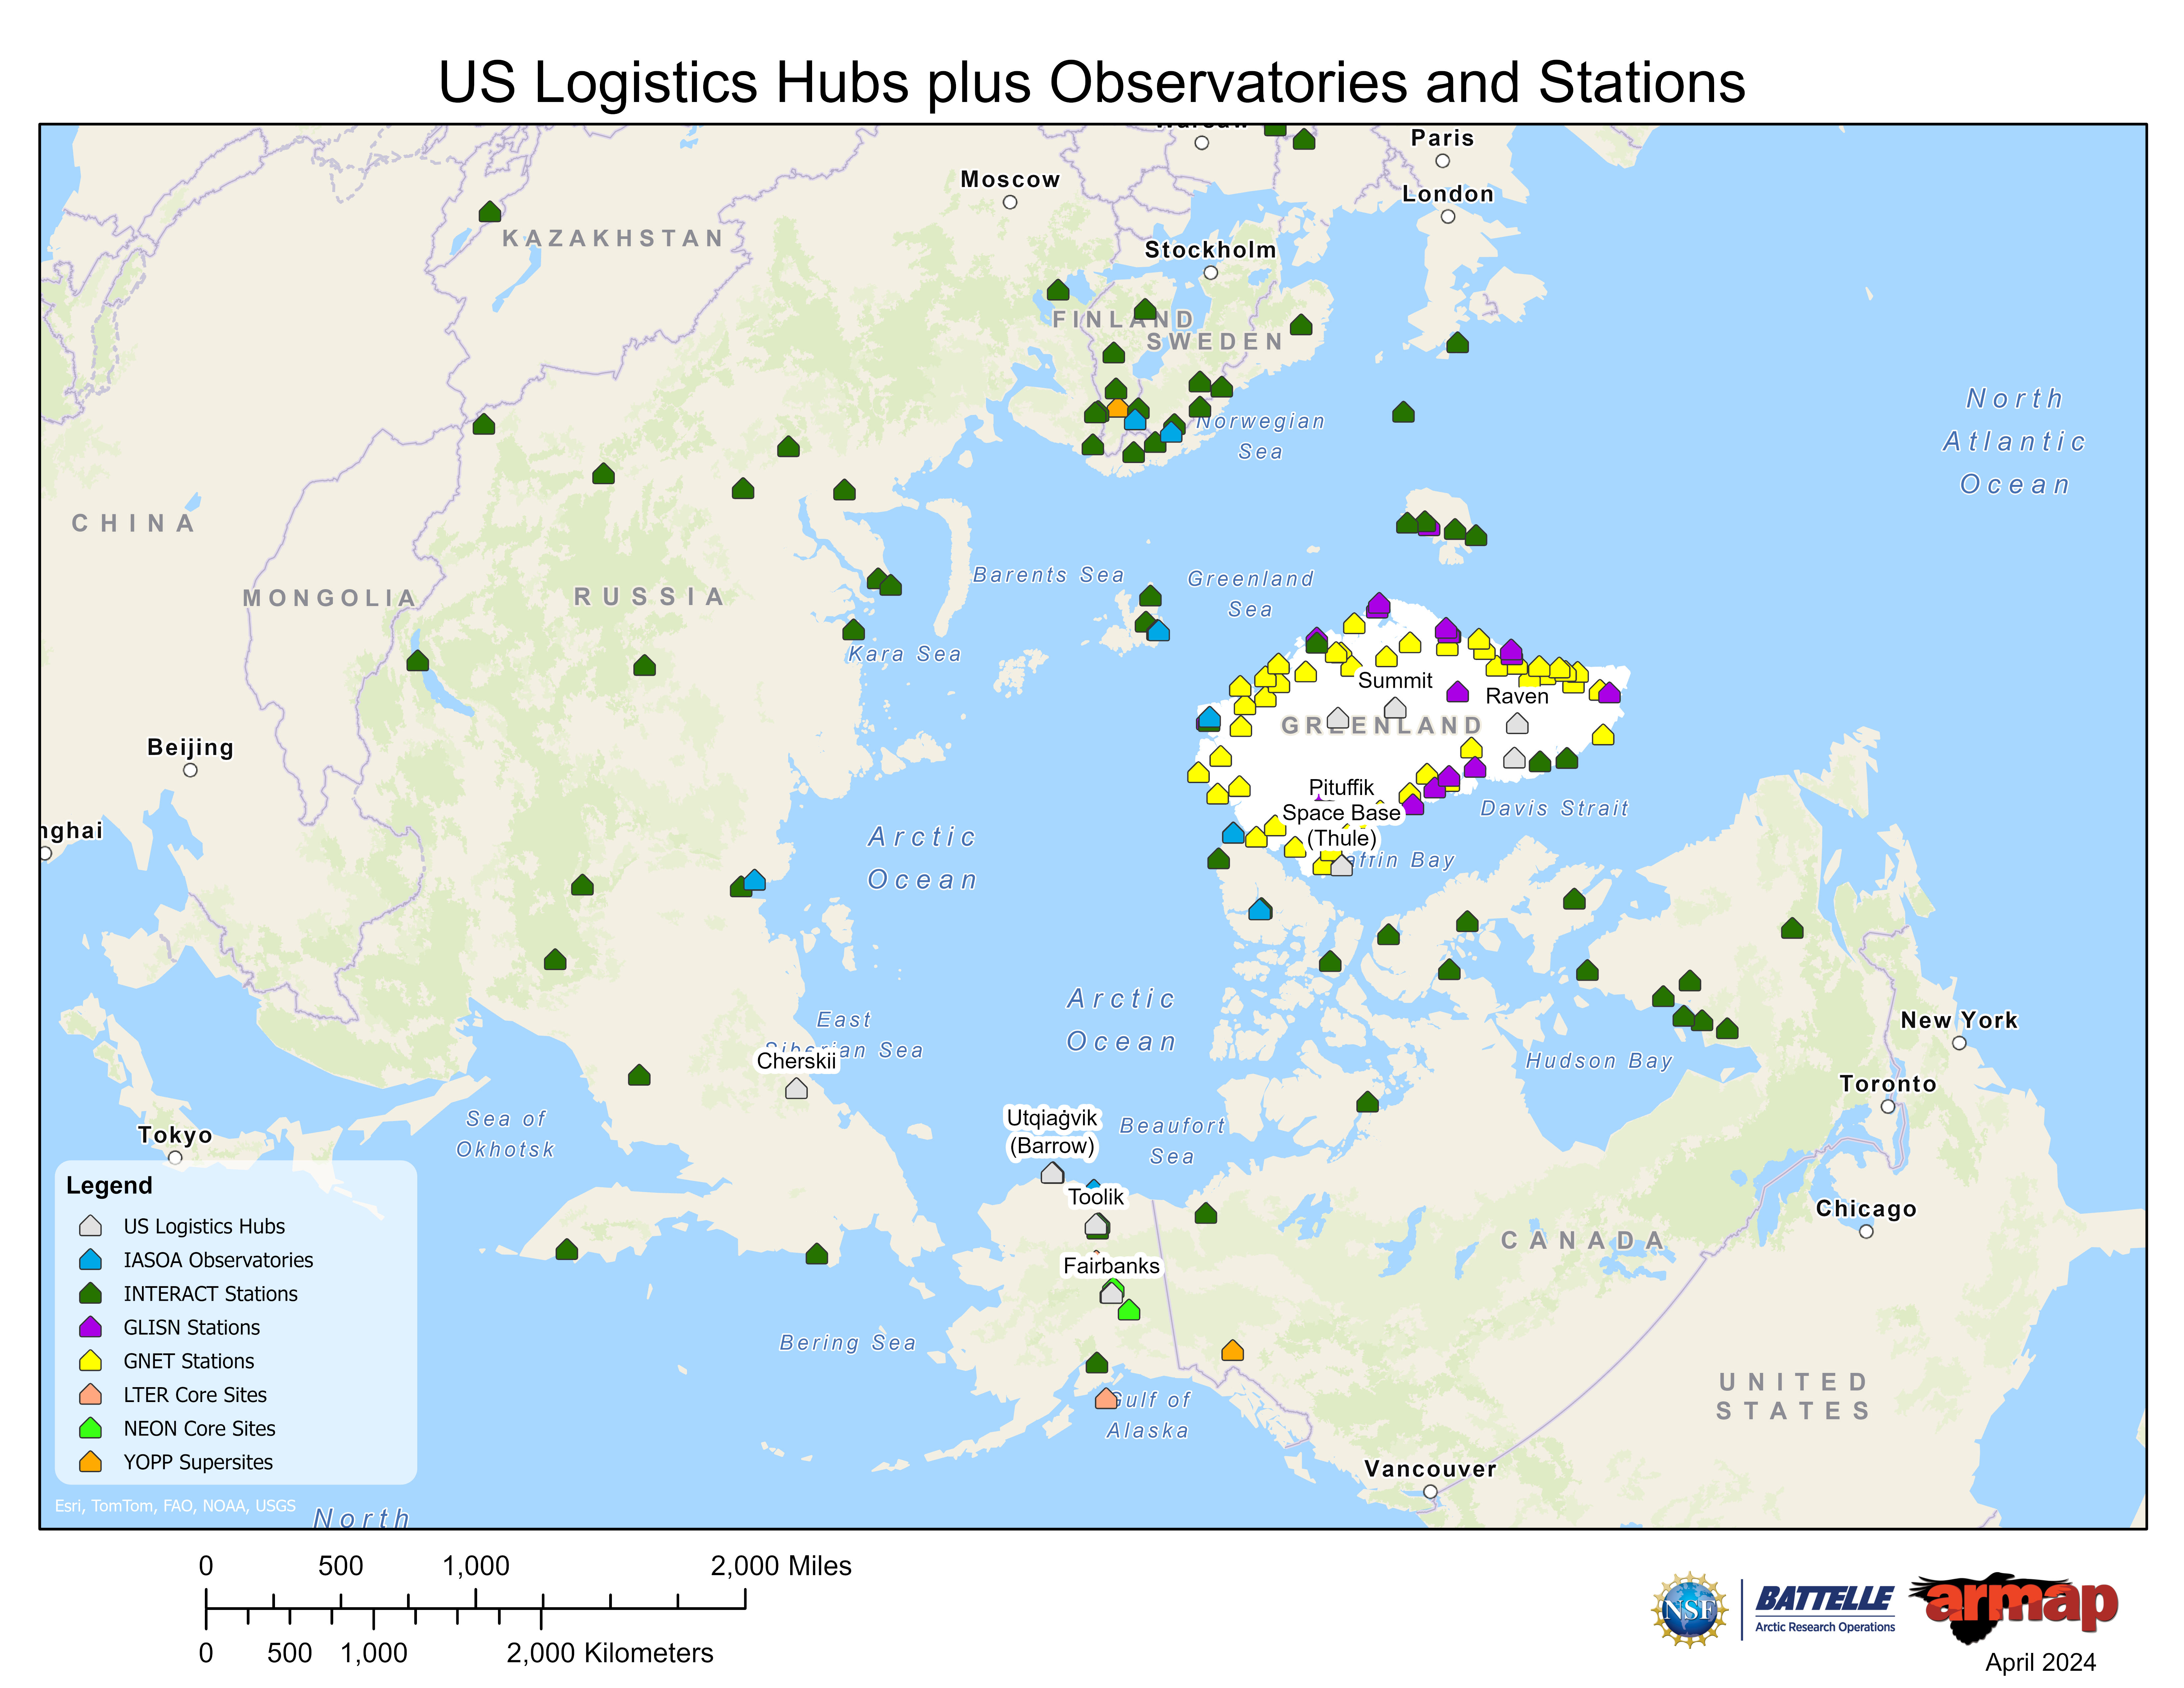 US Logistics Hubs, Observatories and Stations